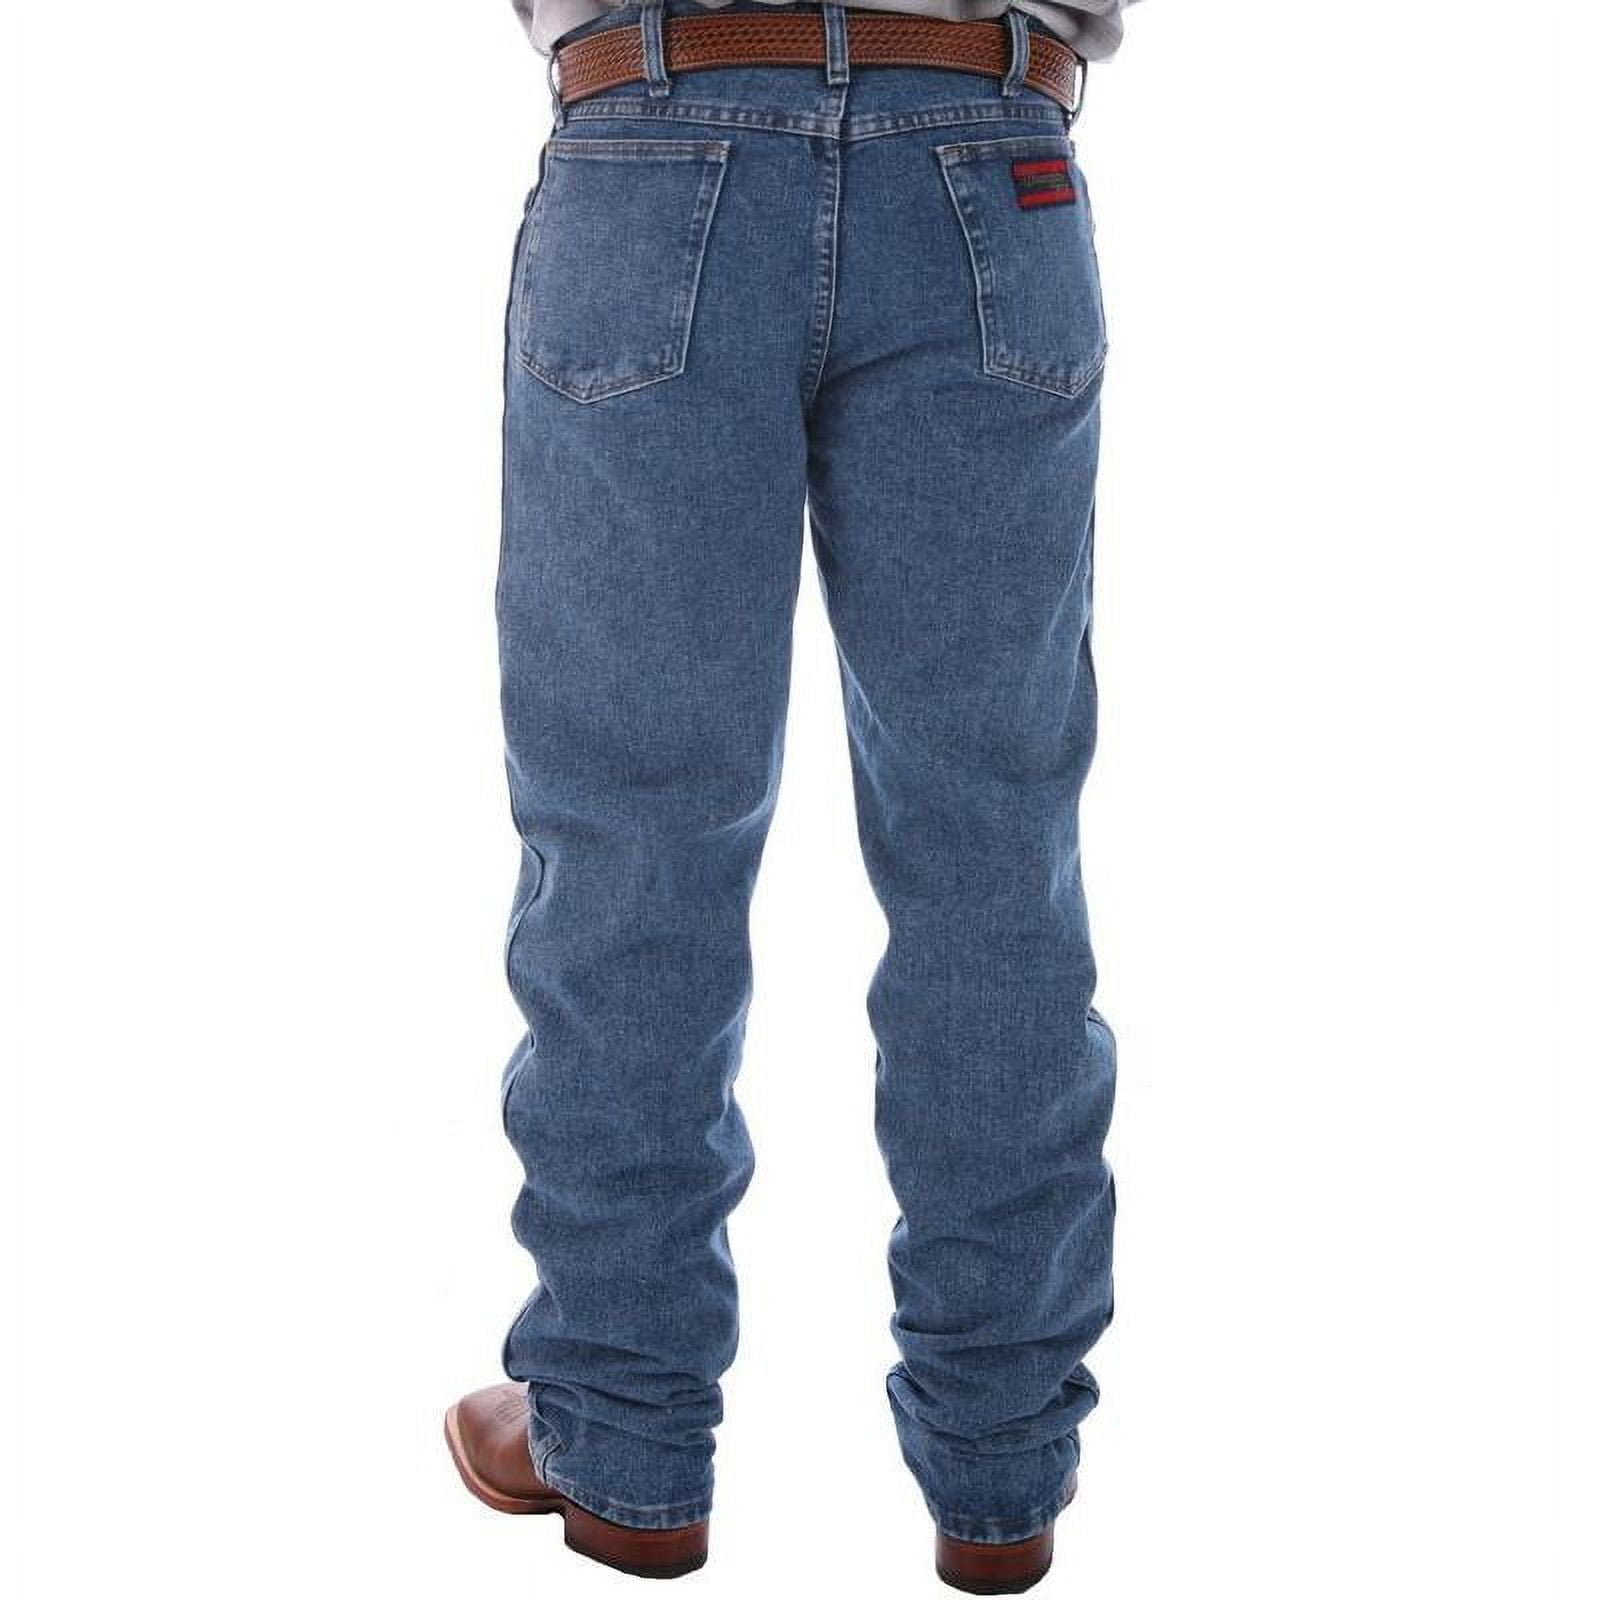 Wrangler Men's Tall 20X Fit Stonewash,36x38 Original Jean,Vintage